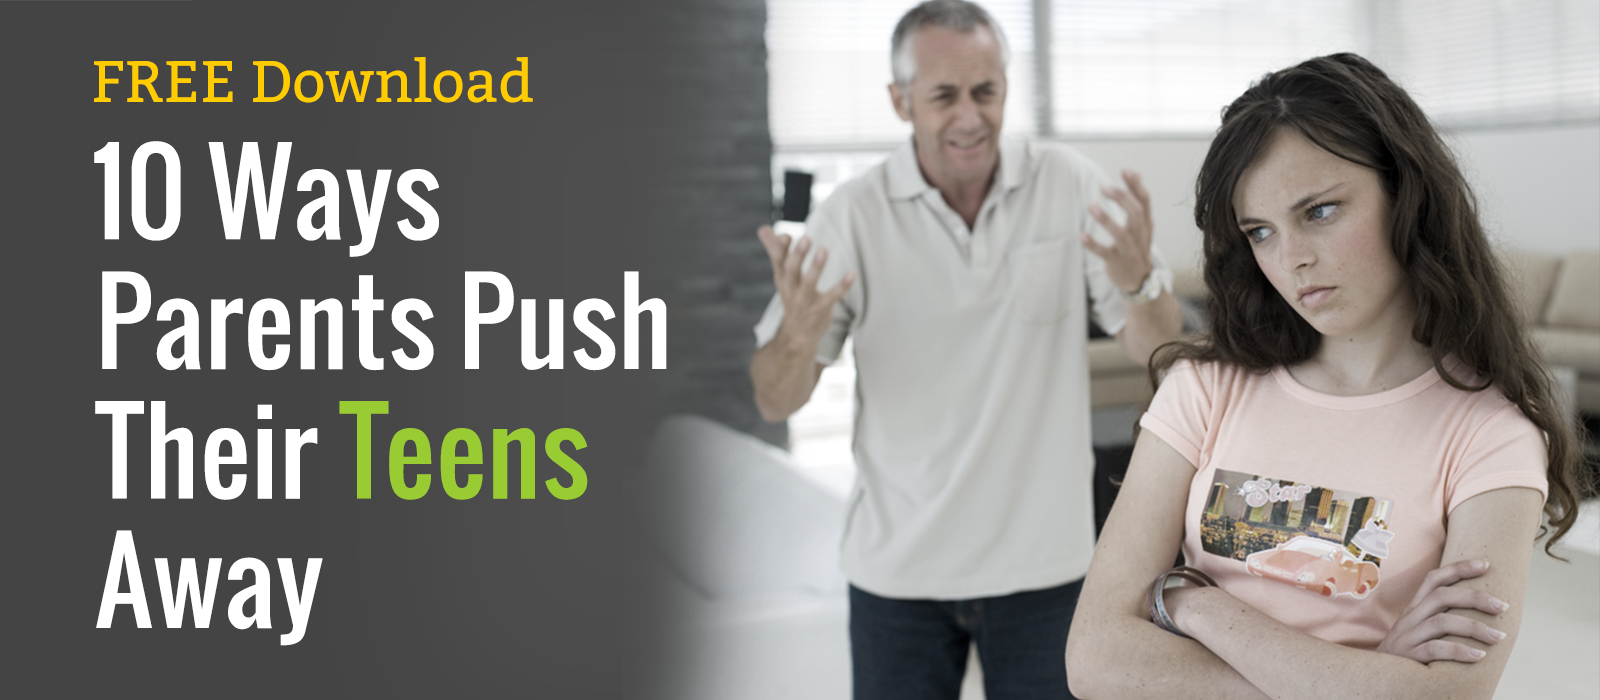 FREE Download of 10 Ways Parents Push Their Teens Away